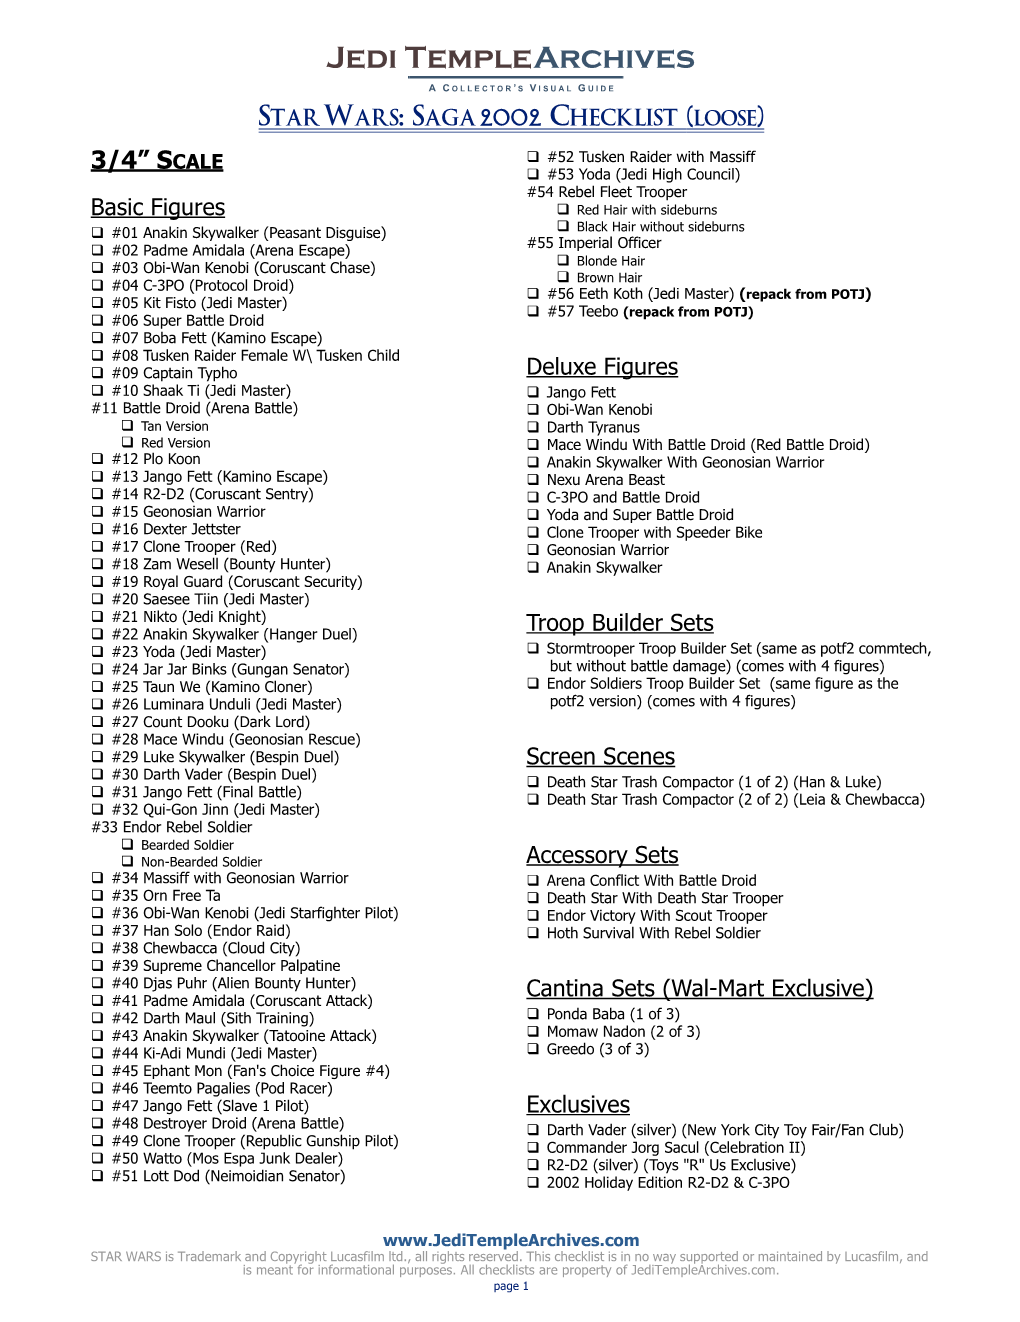 Star Wars: Saga 2002 Checklist (Loose)